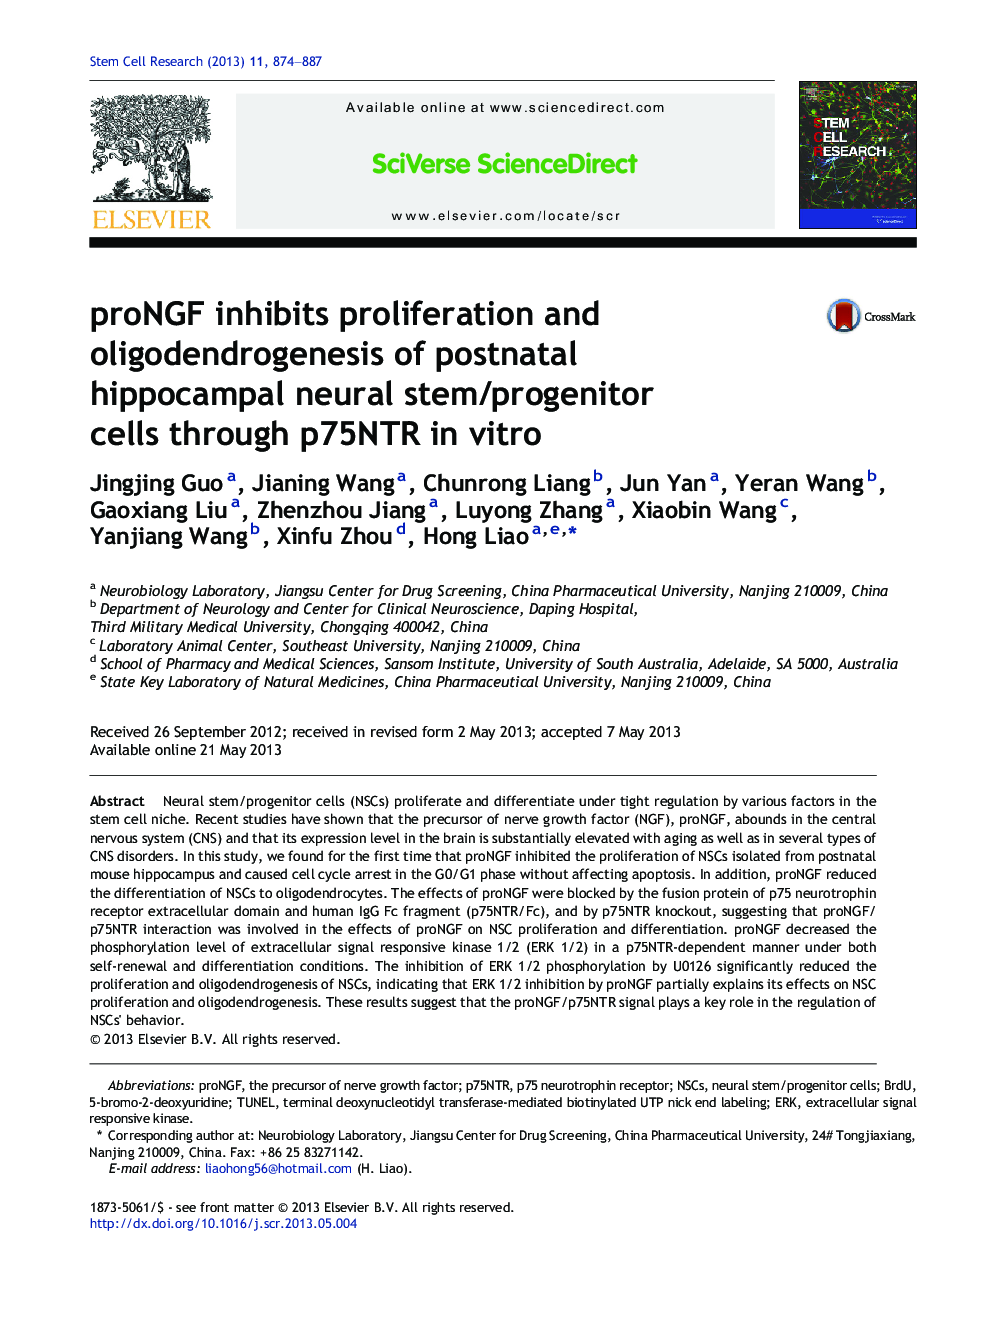 proNGF inhibits proliferation and oligodendrogenesis of postnatal hippocampal neural stem/progenitor cells through p75NTR in vitro